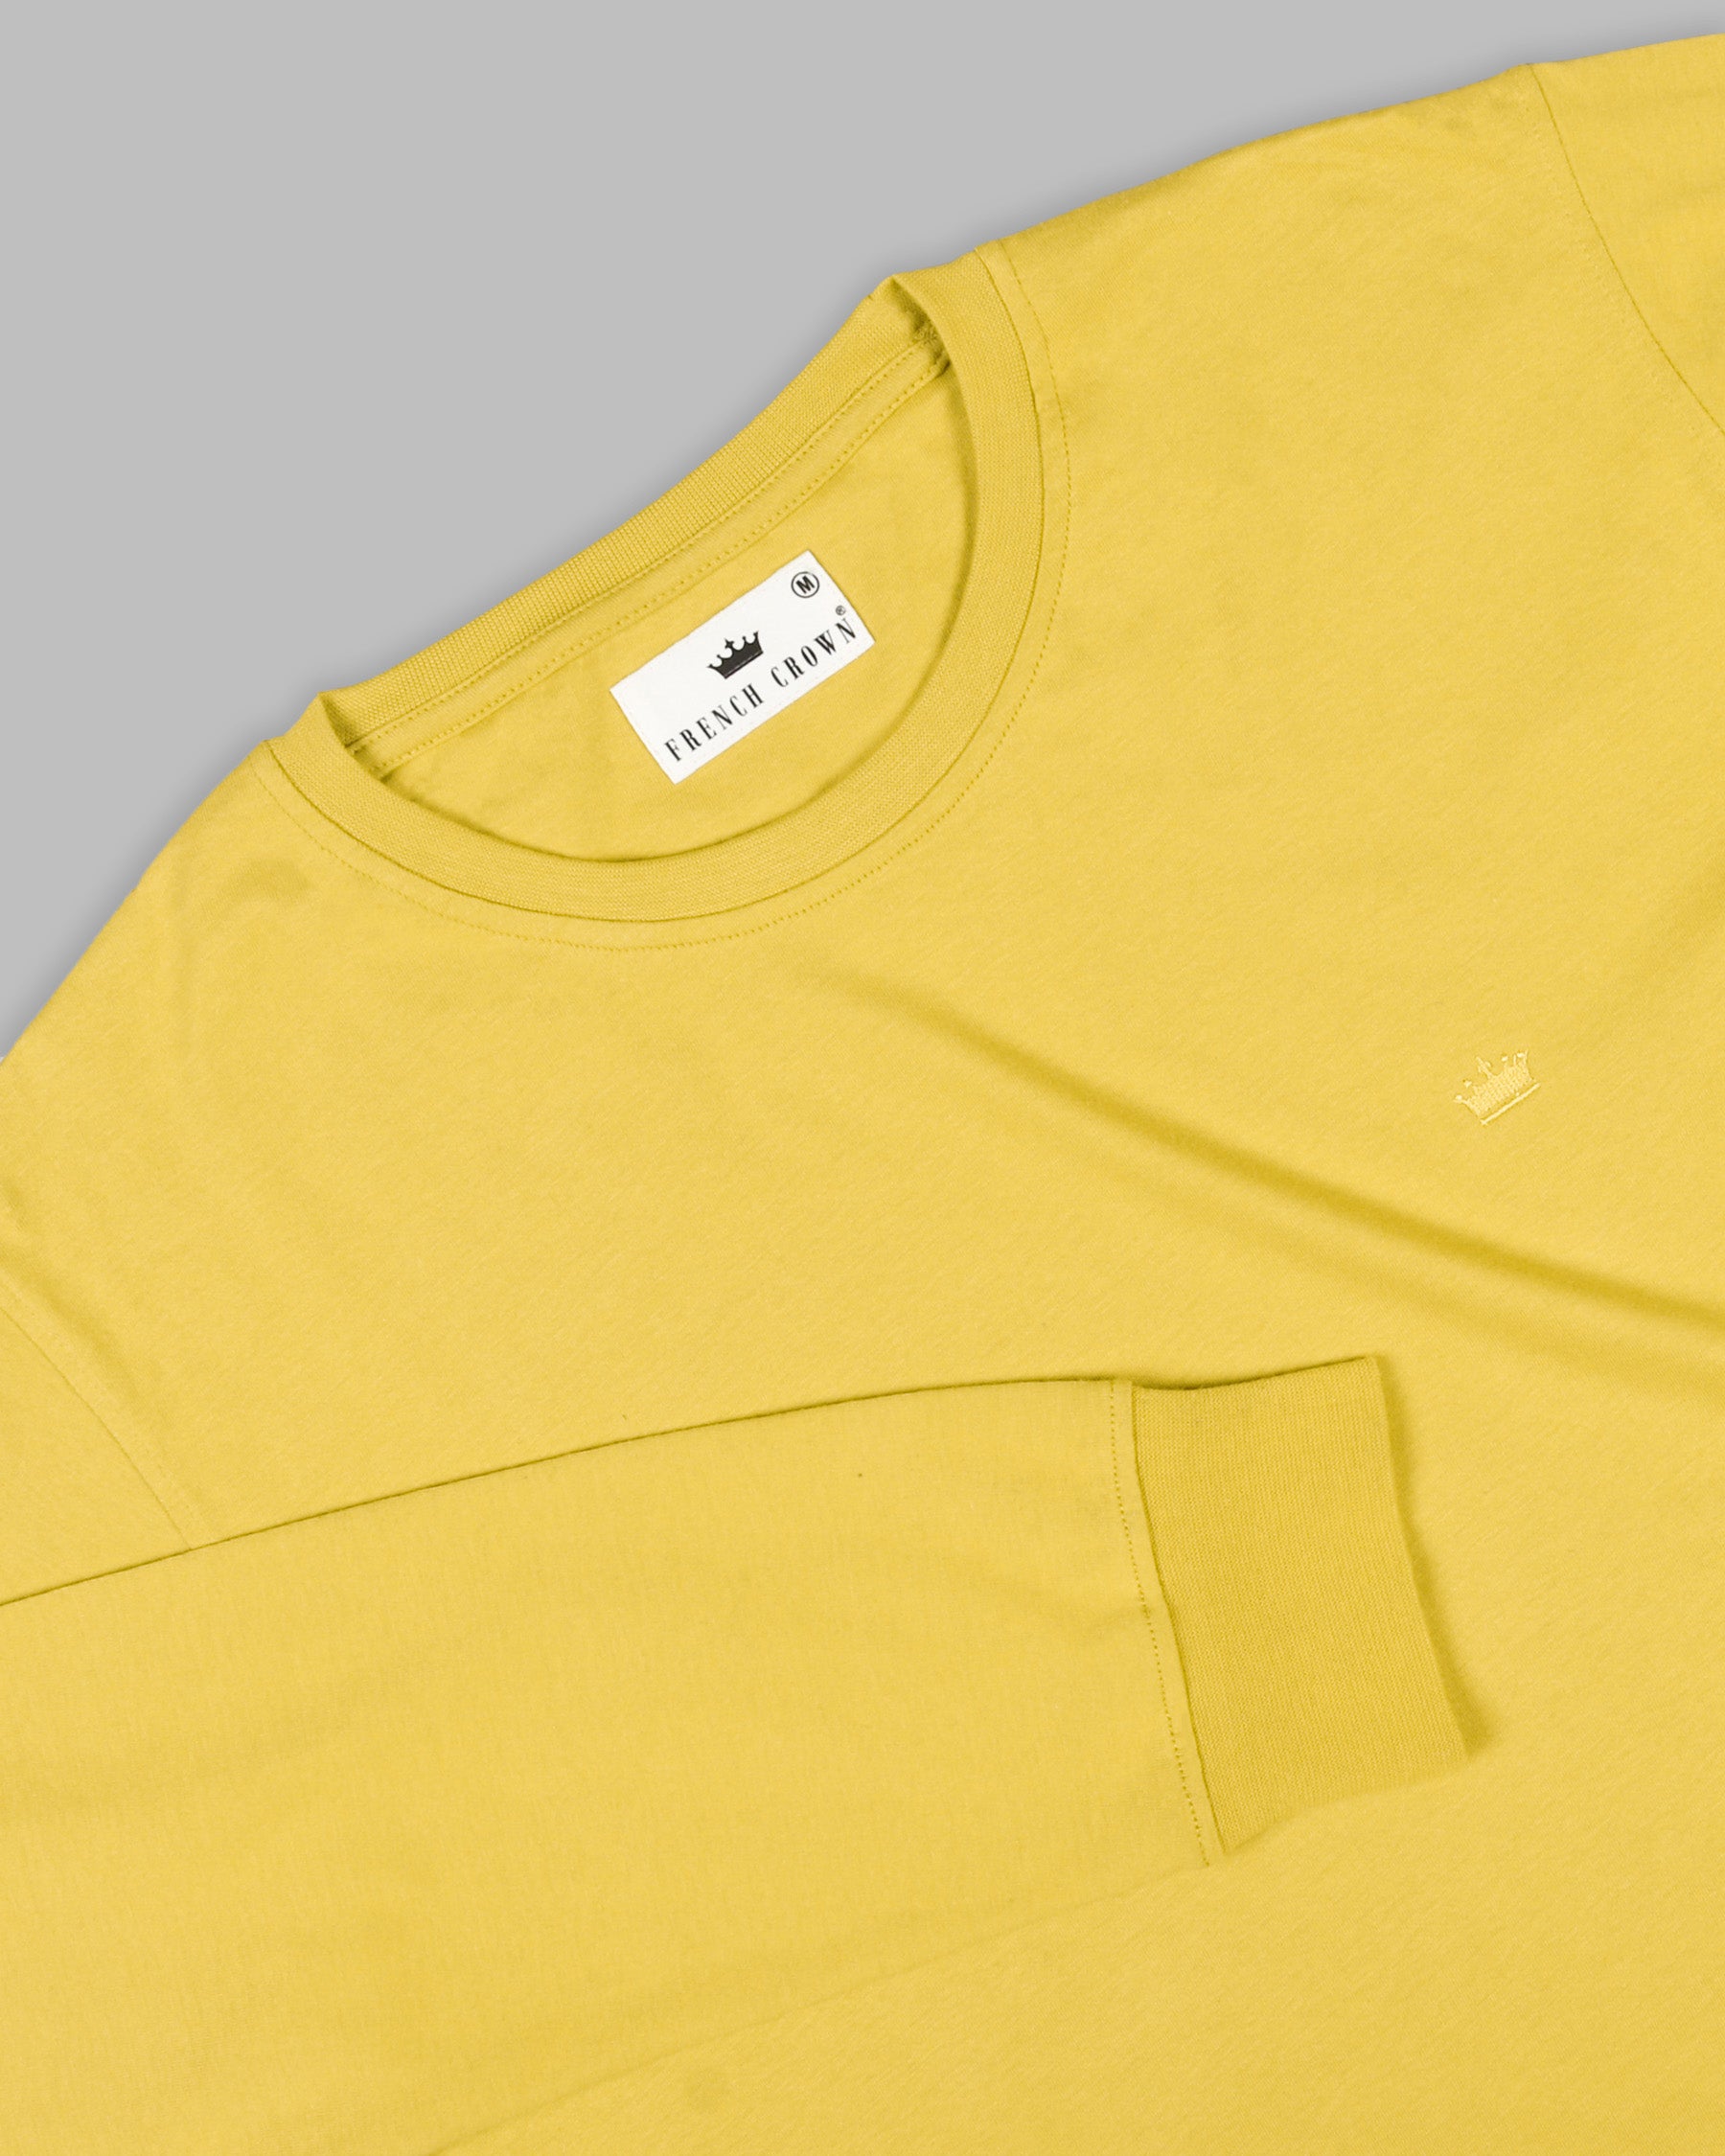 Corn yellow Super Soft Premium Cotton Full Sleeve Organic Cotton Brushed Sweatshirt TS169-L, TS169-XL, TS169-S, TS169-XXL, TS169-M